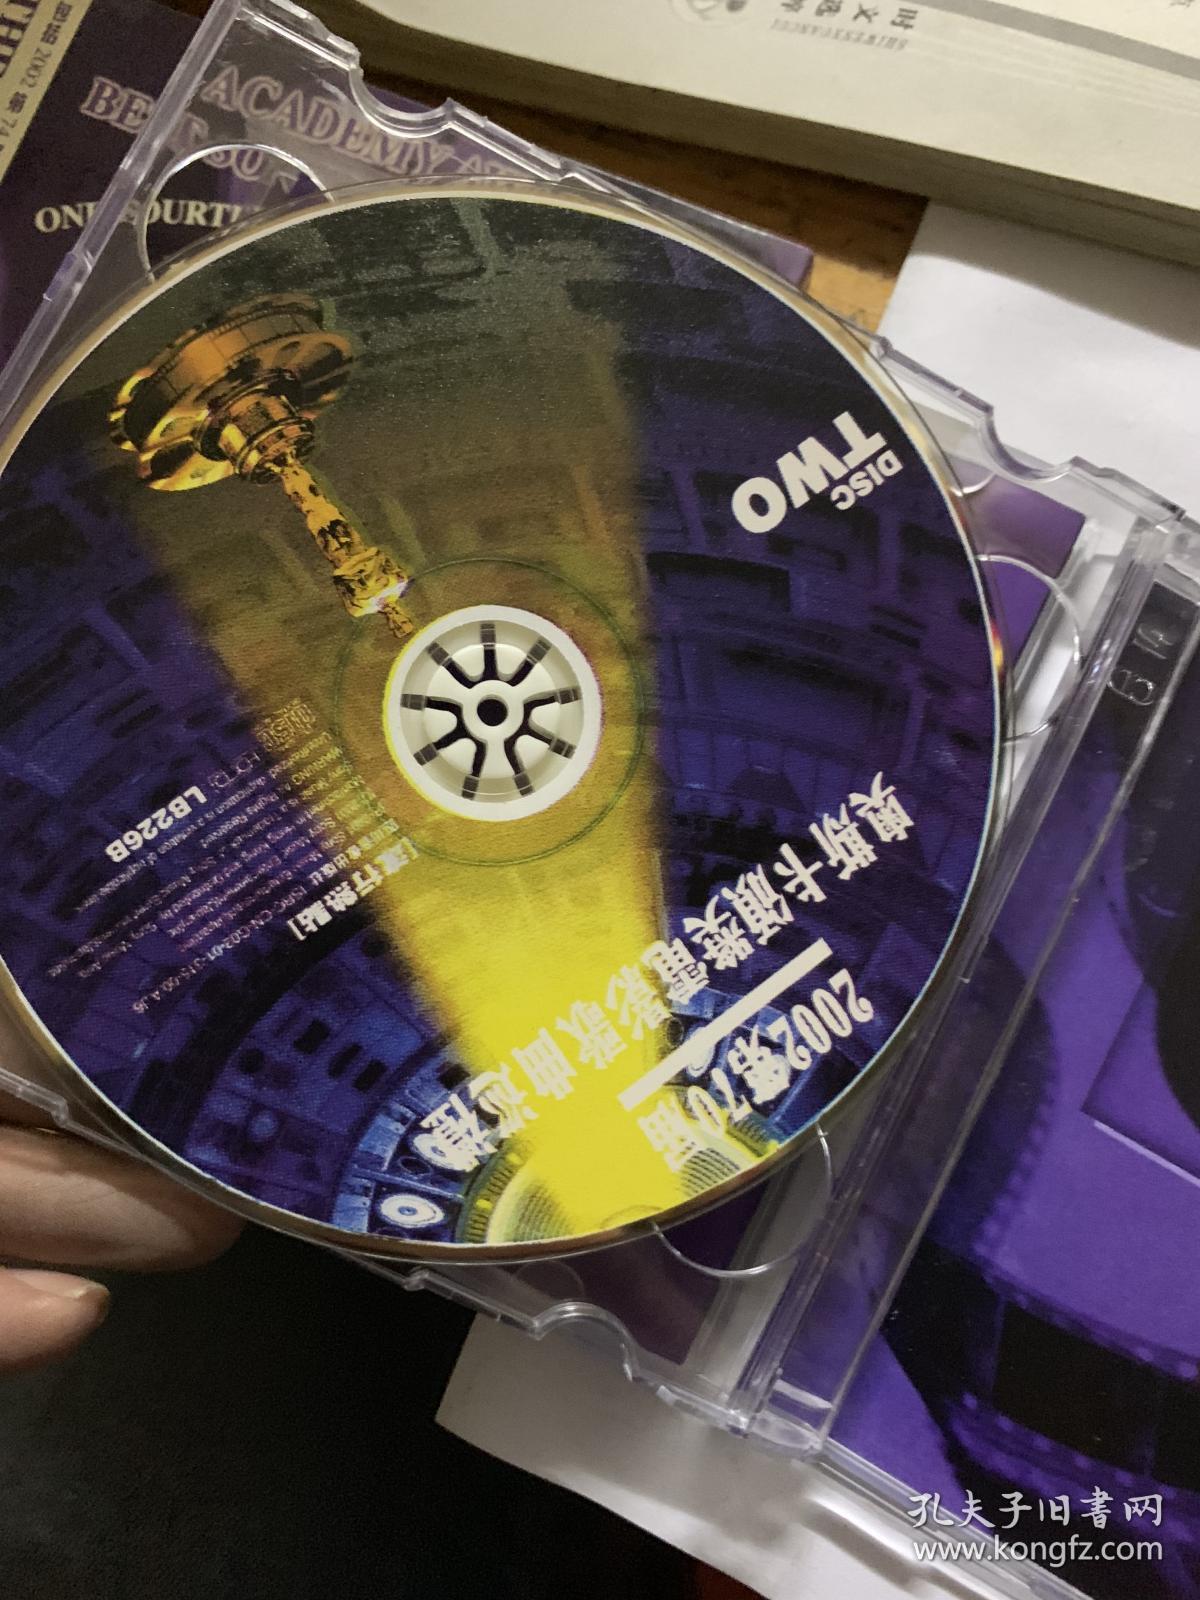 CD  THE WINNER IS OSCAR   2碟